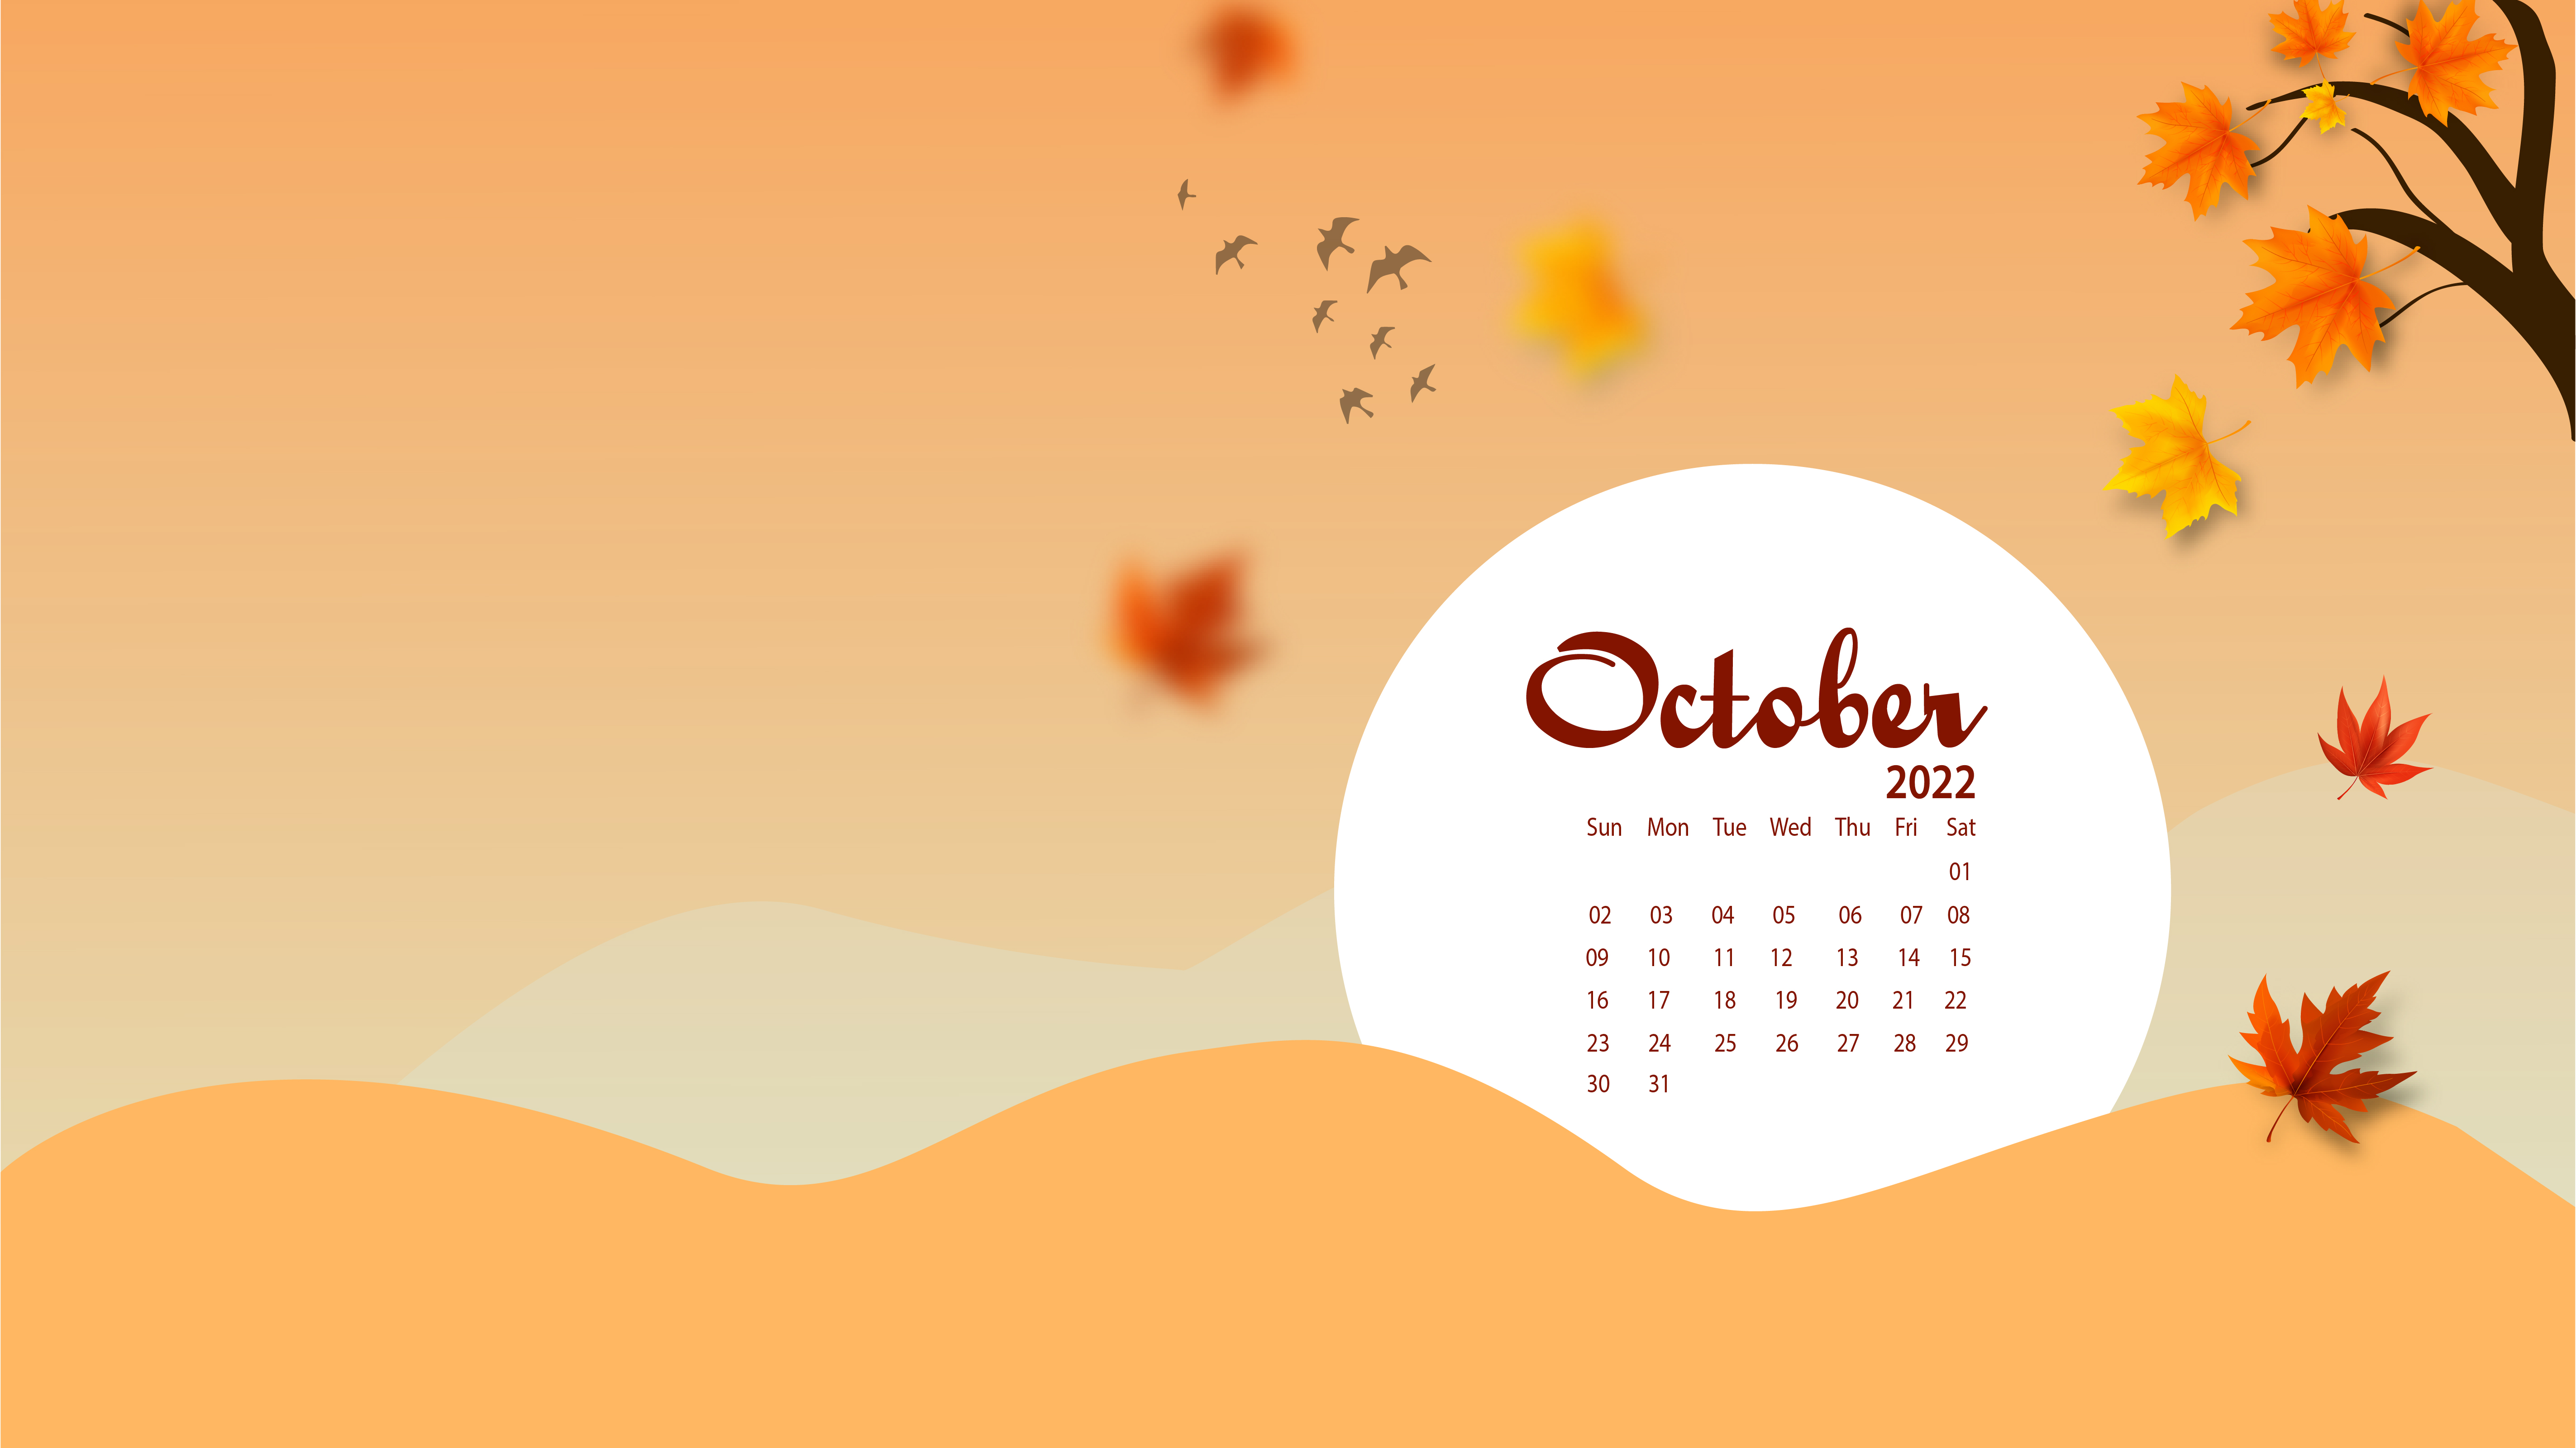 October 2018 wallpaper calendar for desktop background